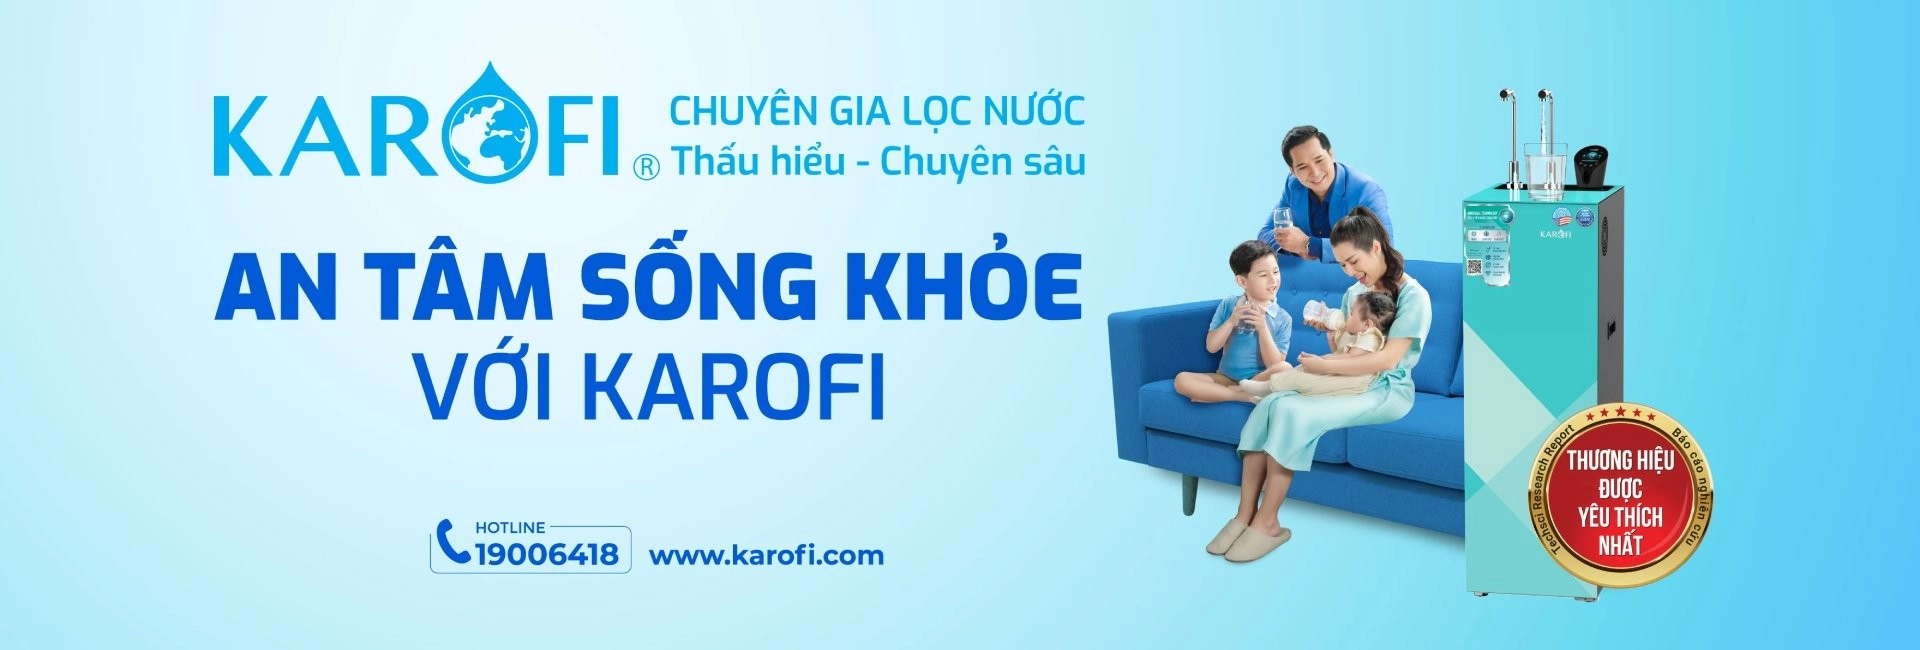 karofi-an-tam-song-khoe